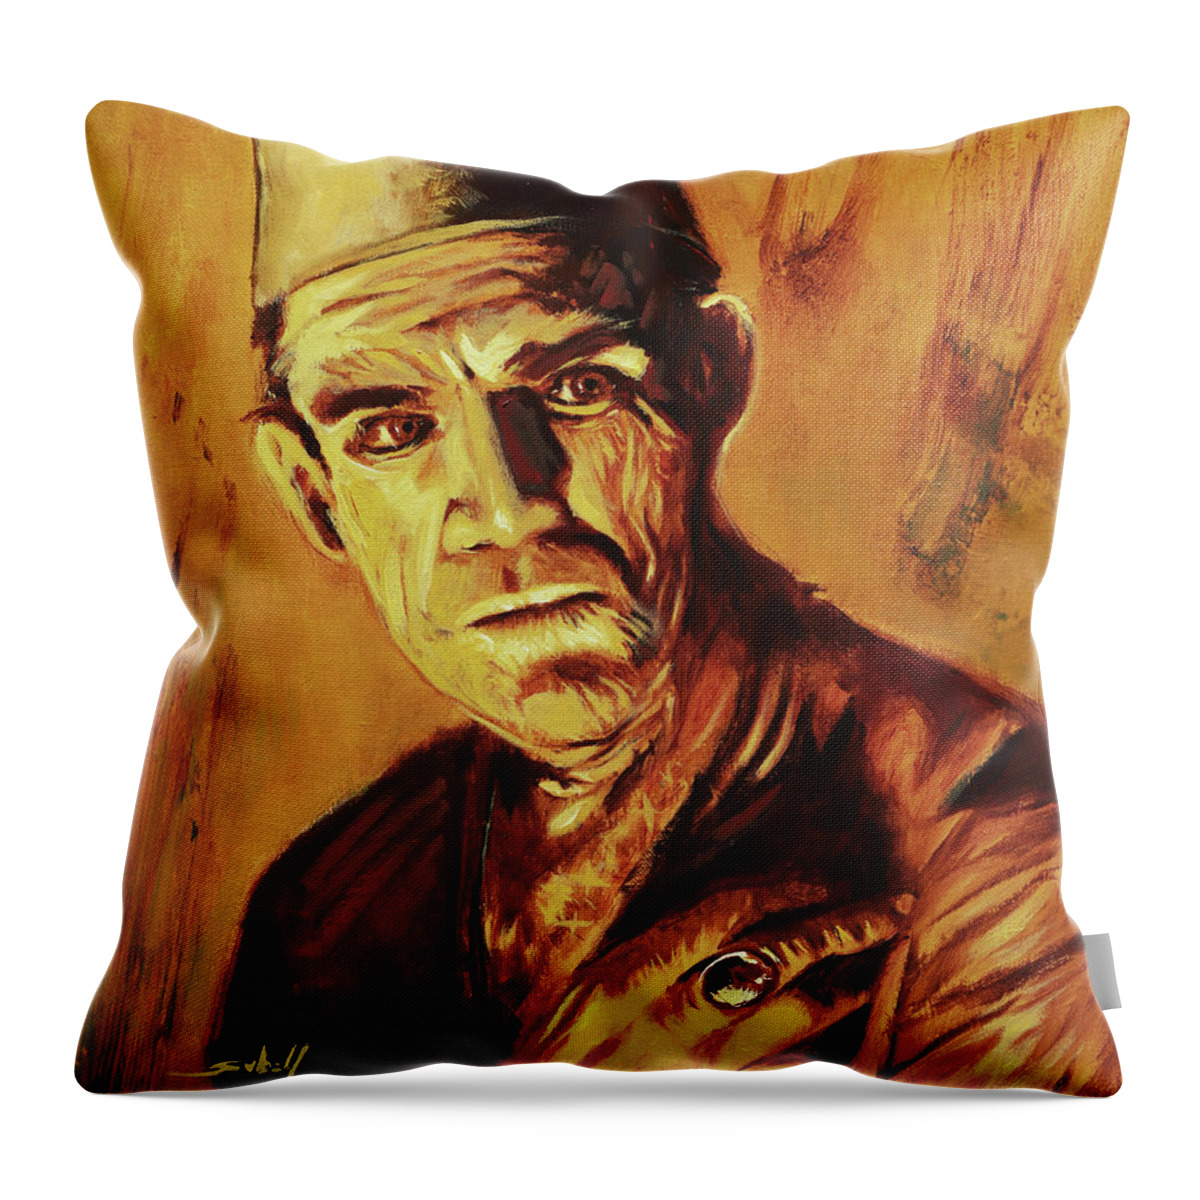 Boris Karloff Throw Pillow featuring the painting Boris Karloff The Mummy by Sv Bell